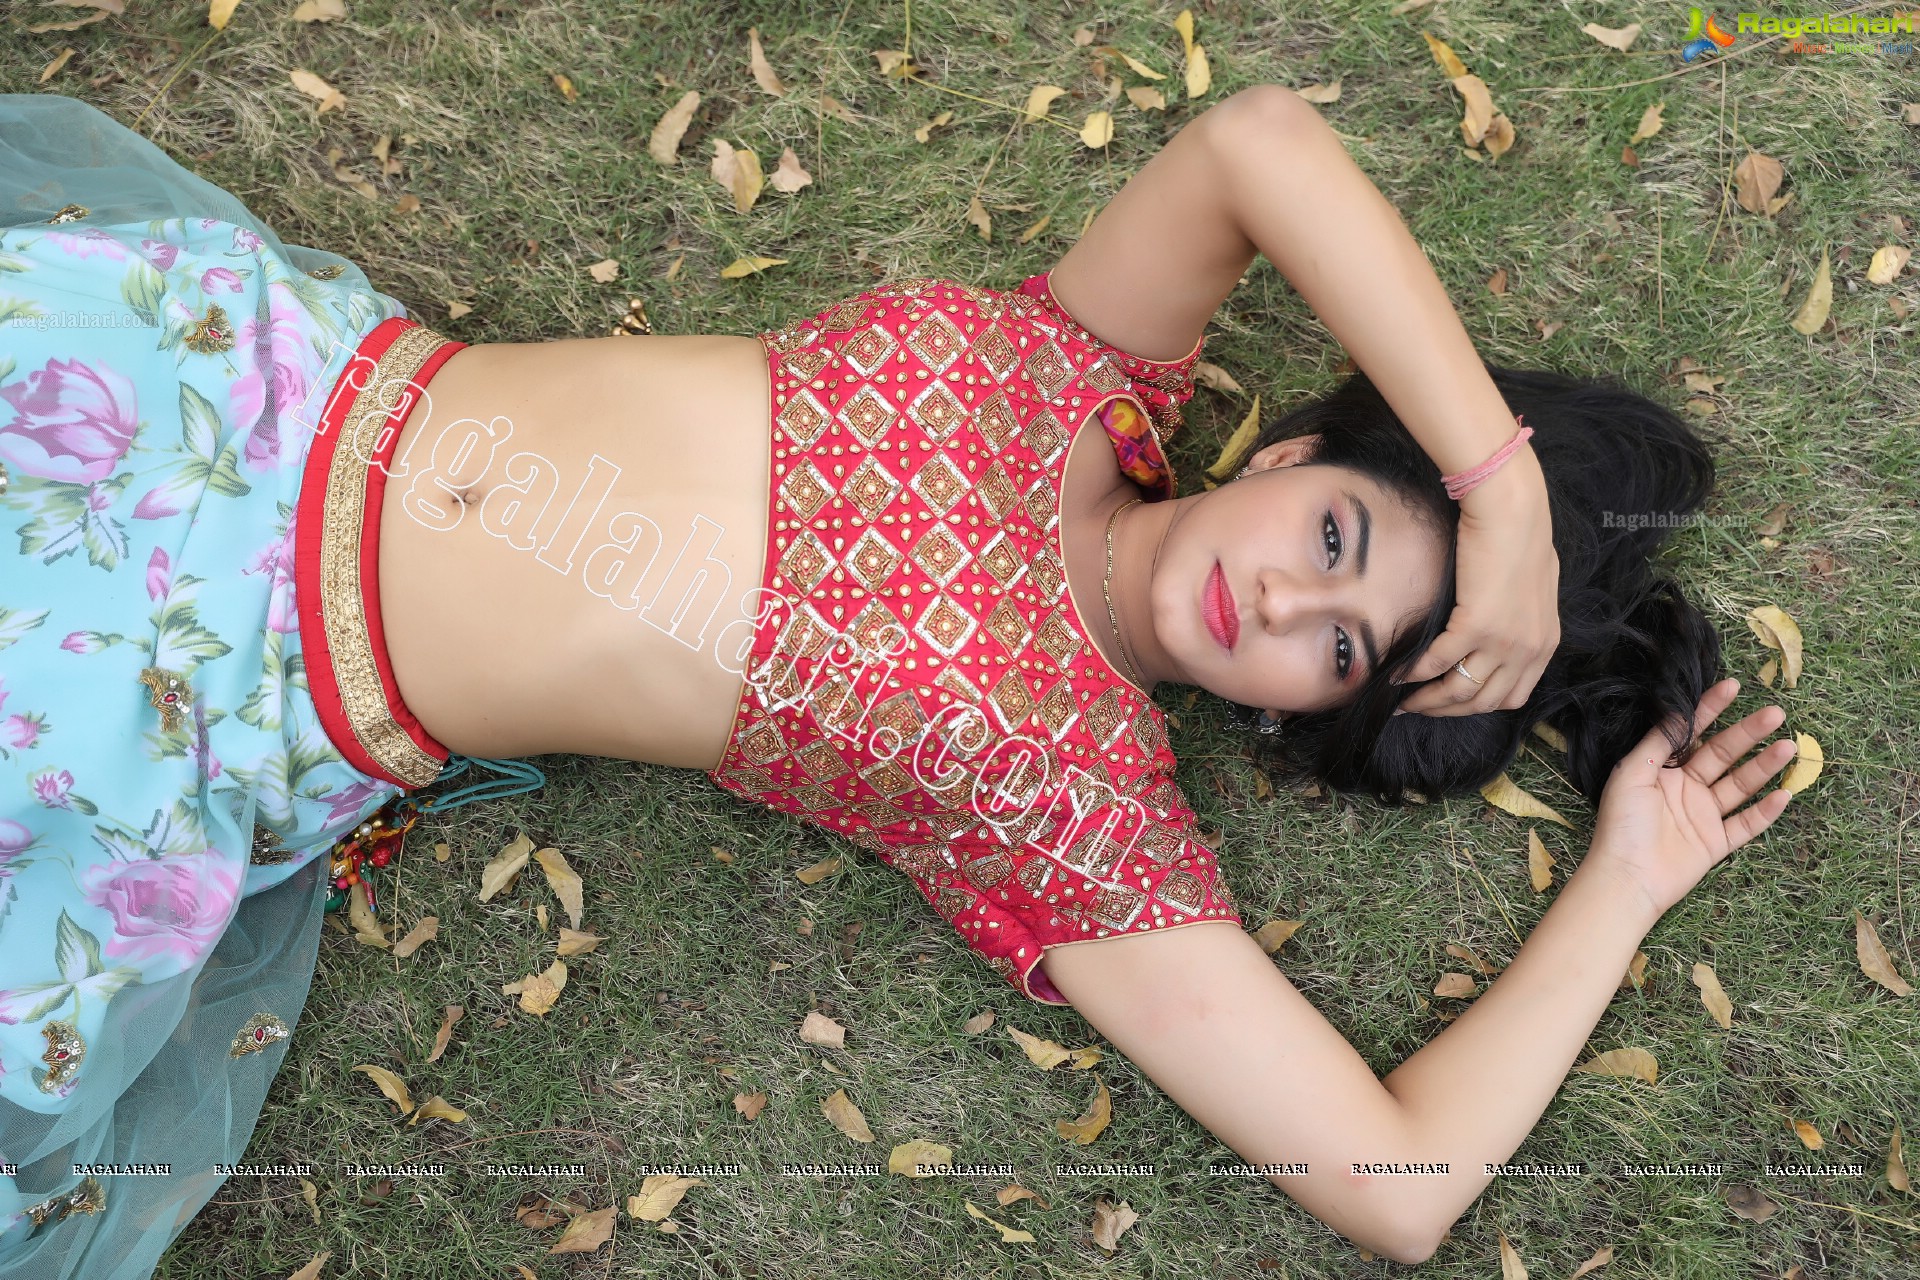 Sheetal Bhatt in Ice Blue and Hot Pink Lehenga Choli Exclusive Photo Shoot